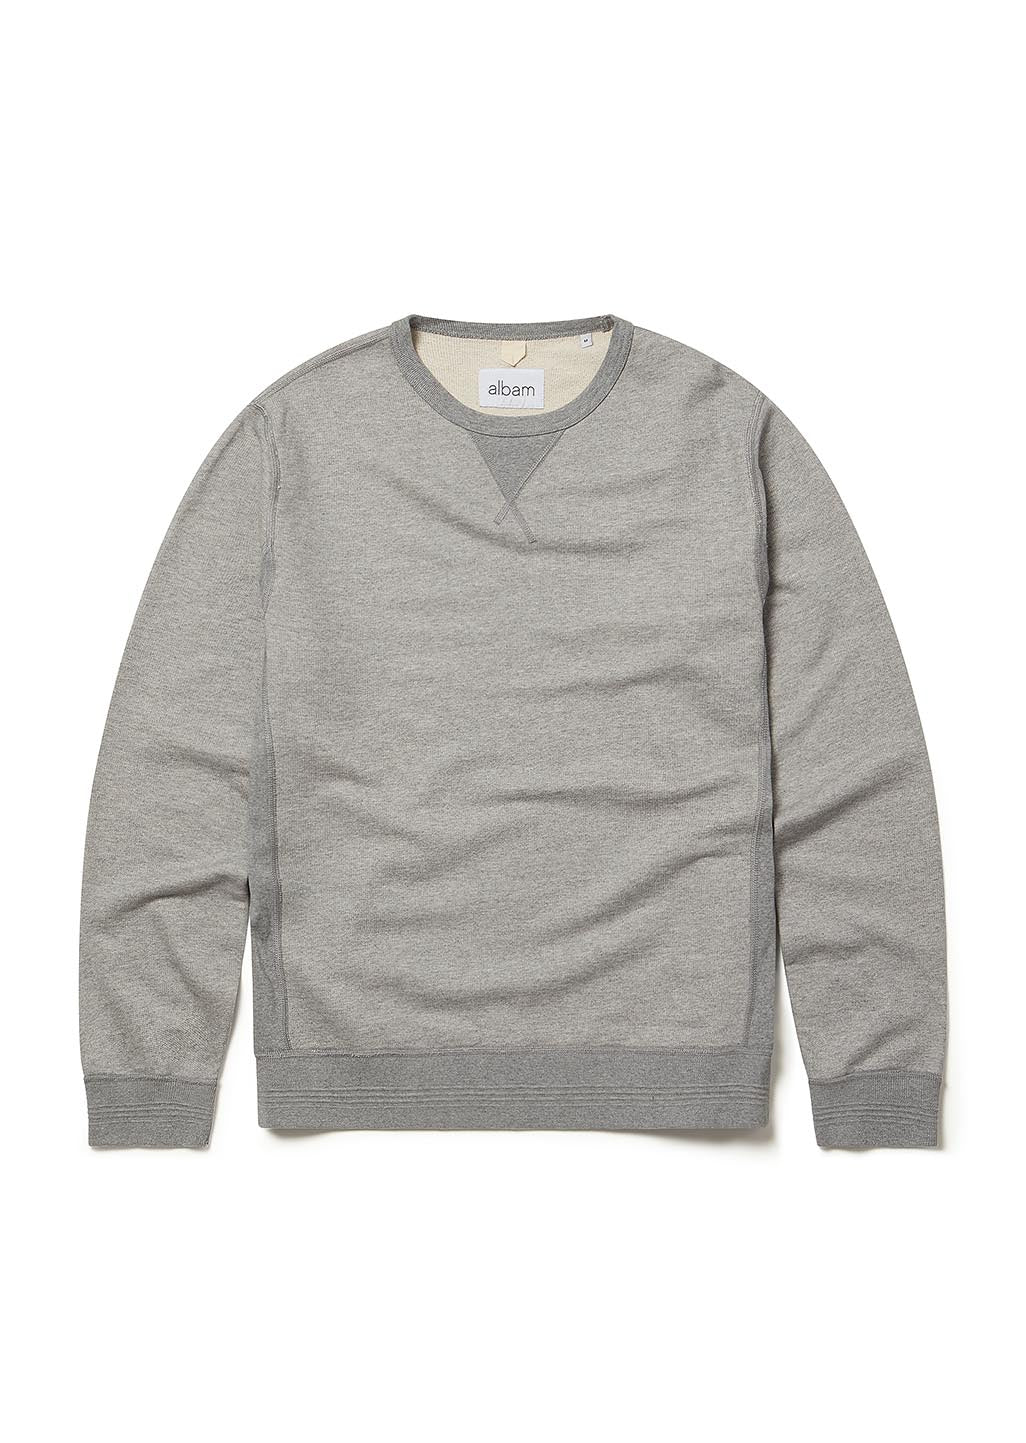 classic grey sweatshirt